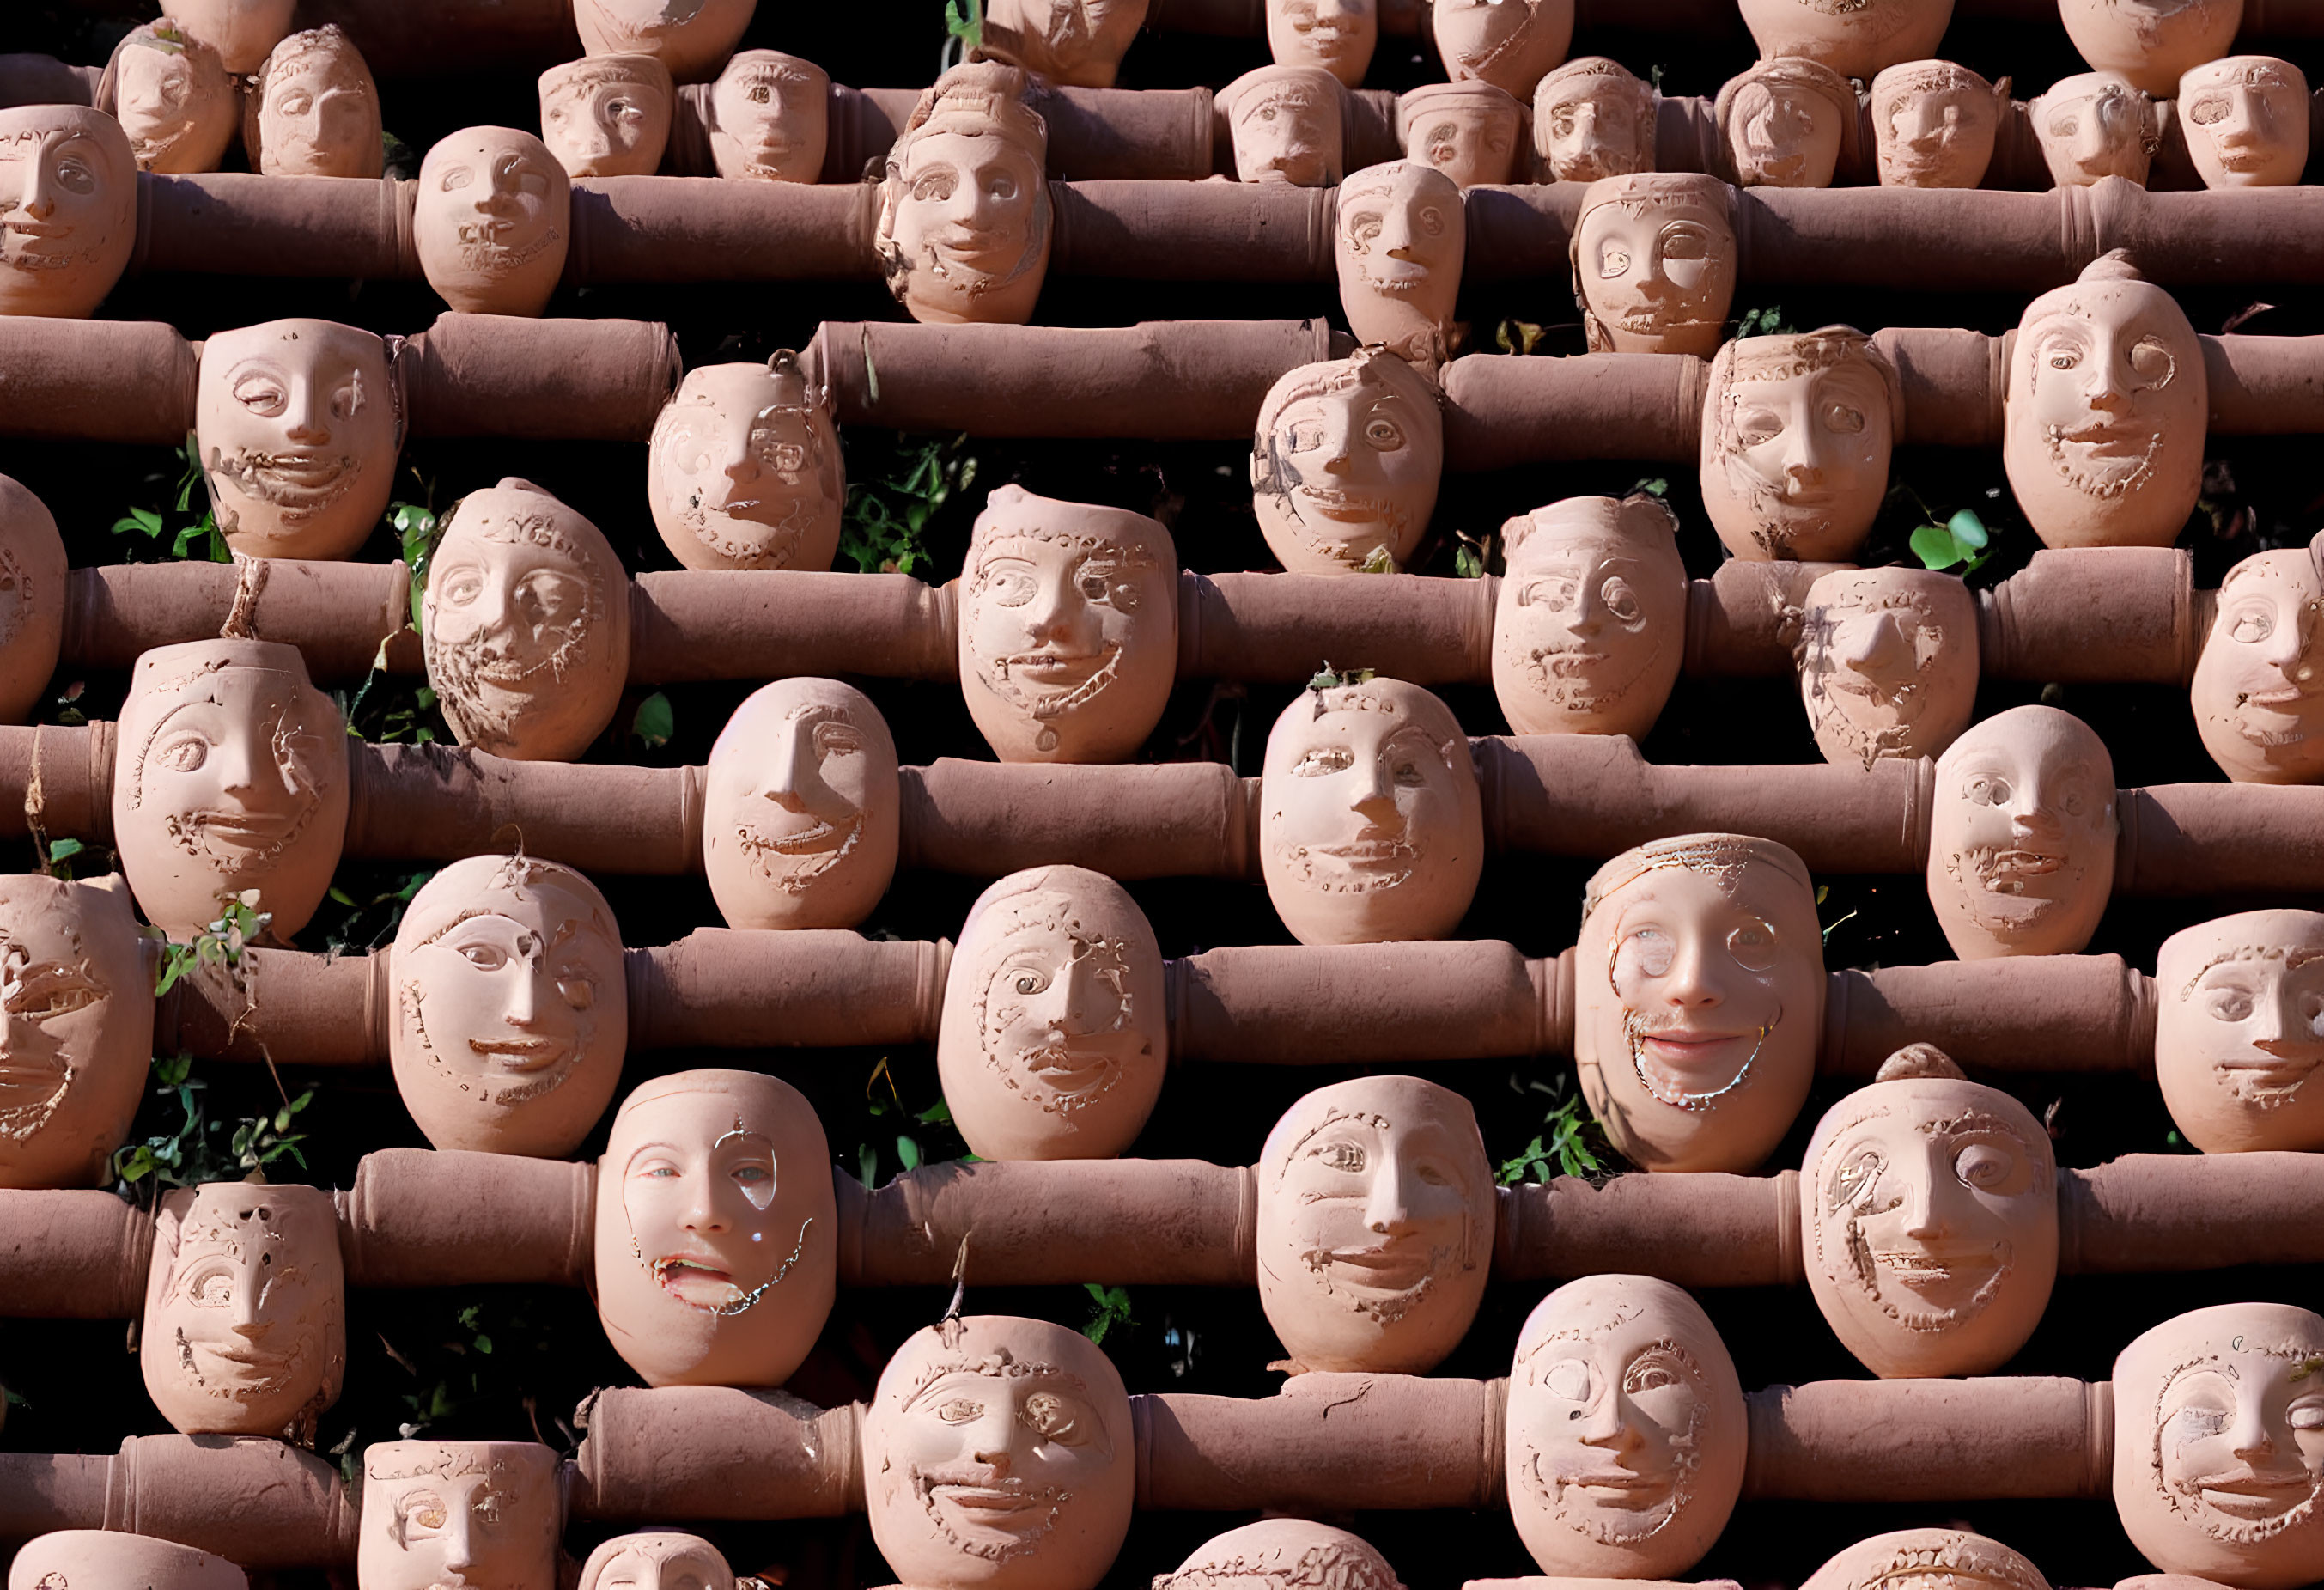 Terracotta figures with unique smiling faces under sunlight